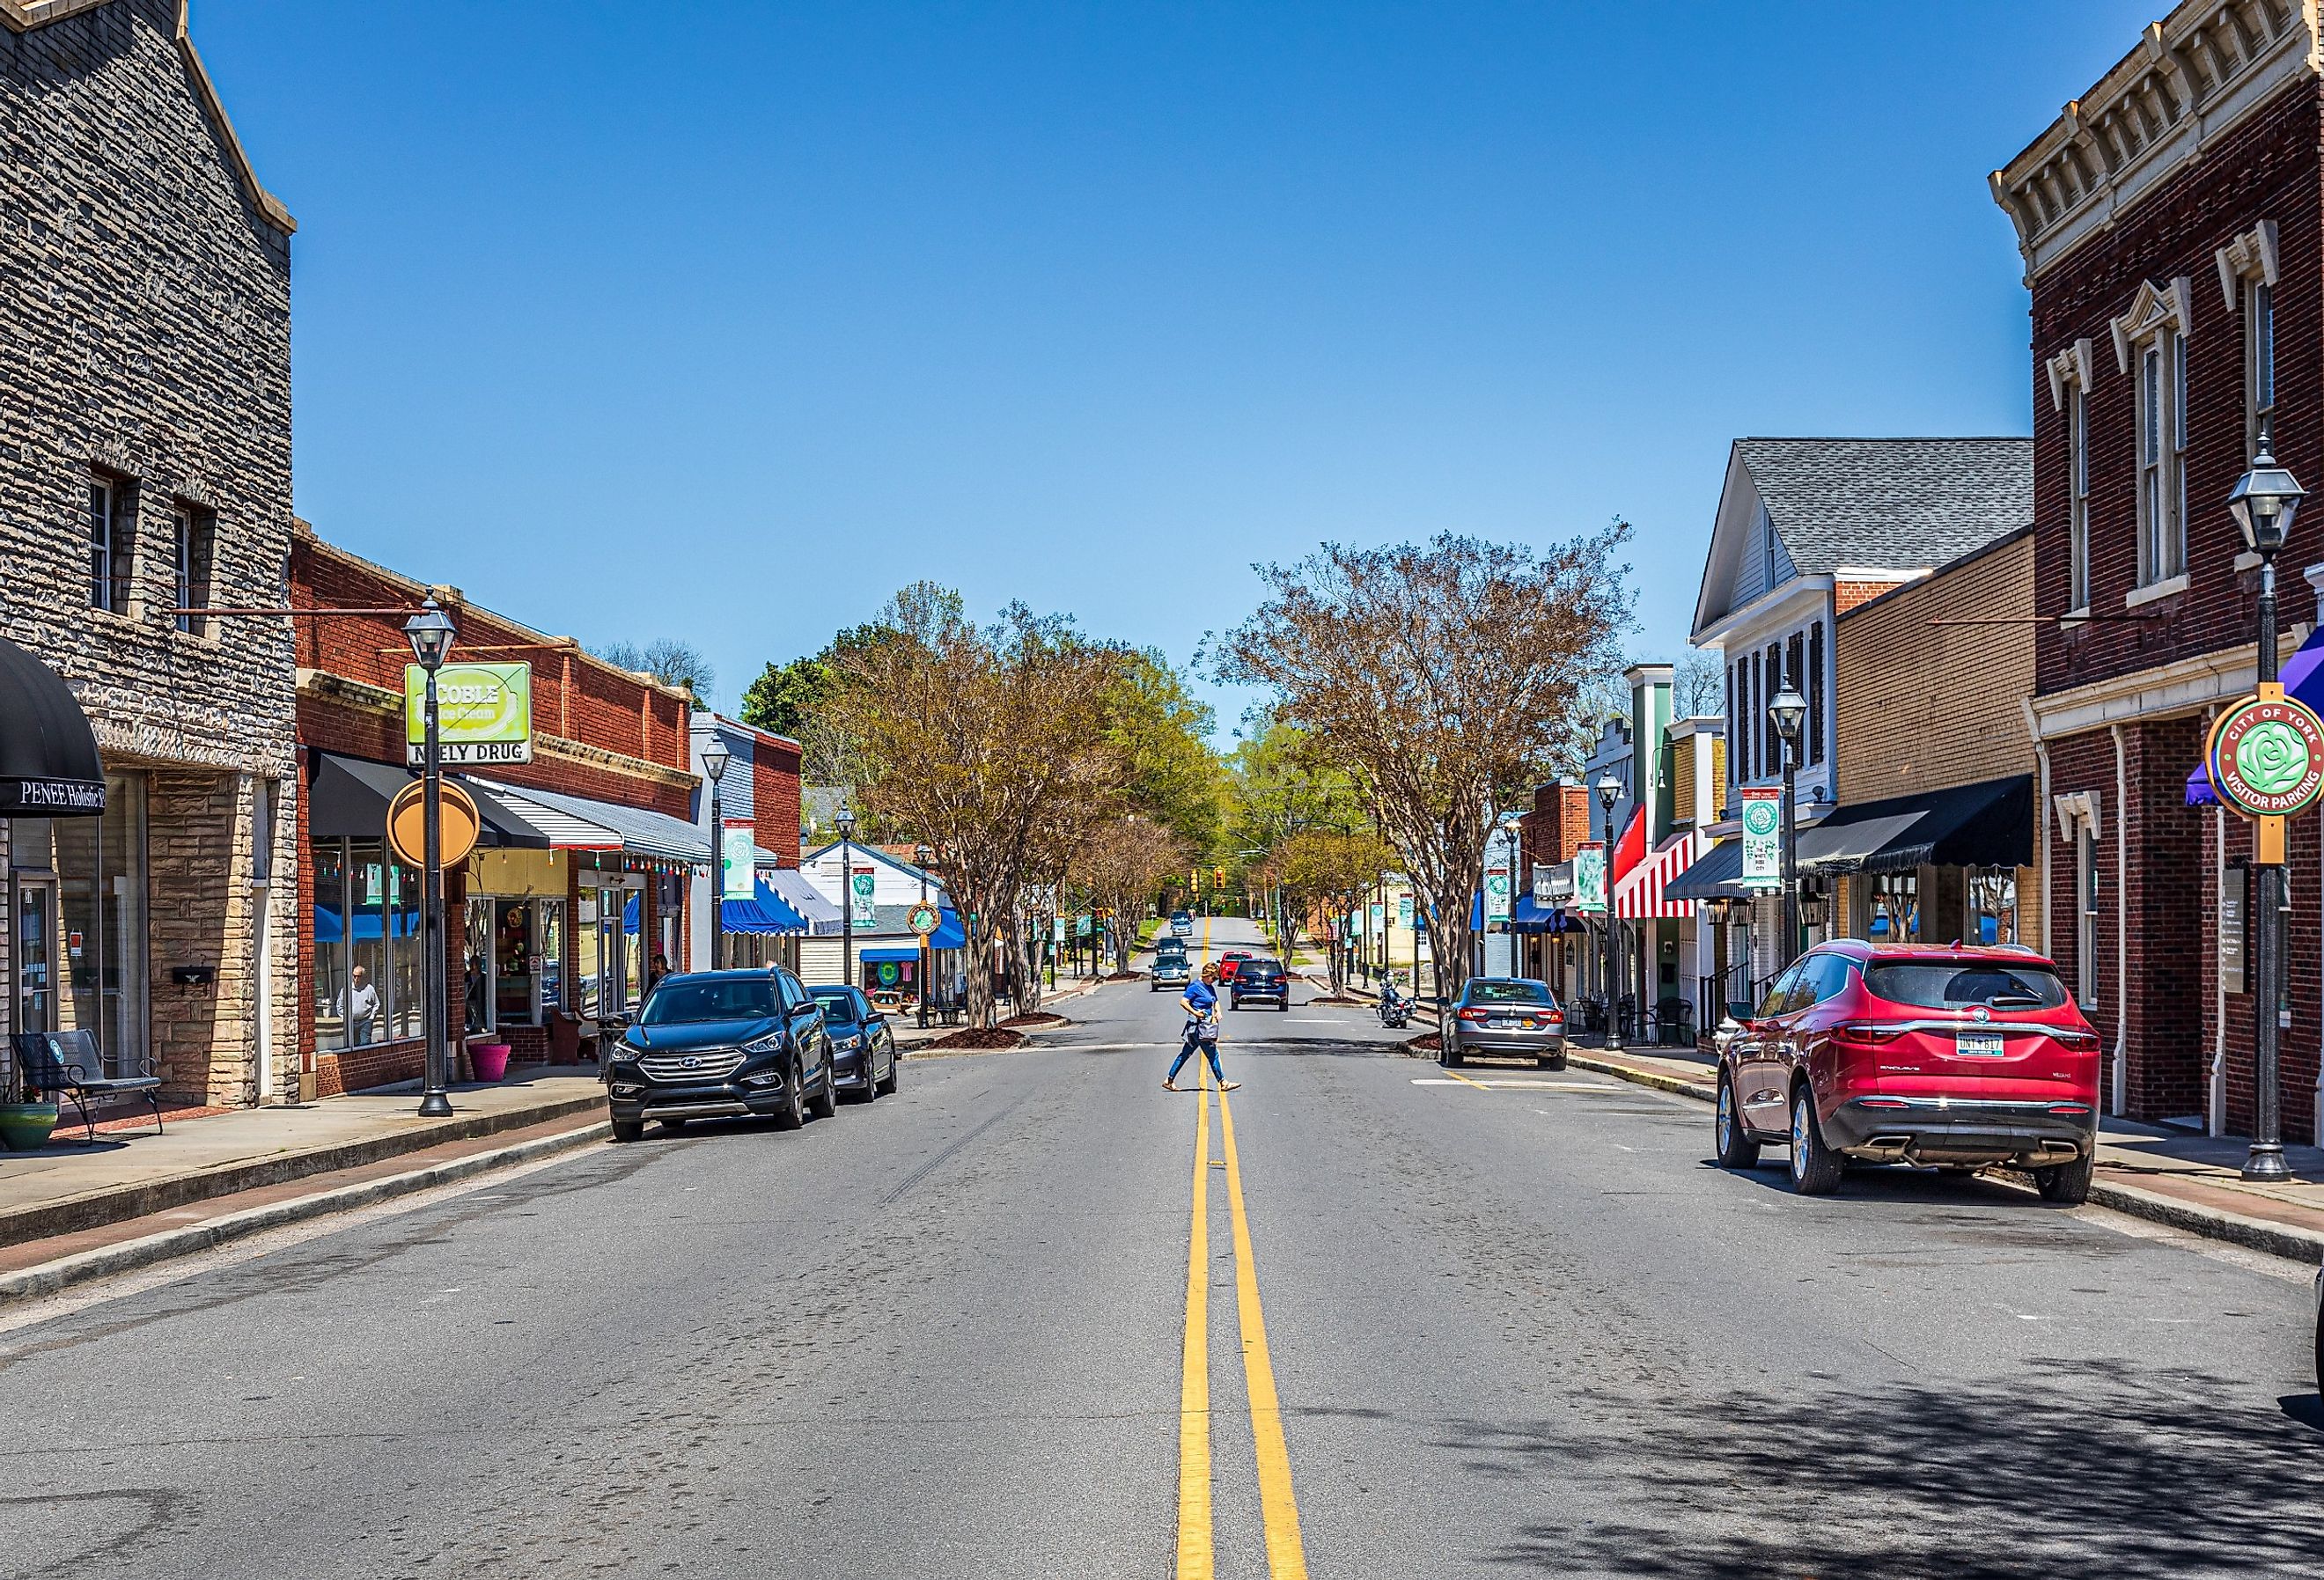 North Congress Street on a sunny, blue sky, spring day in York, South Carolina. Image credit Nolichuckyjake via Shutterstock